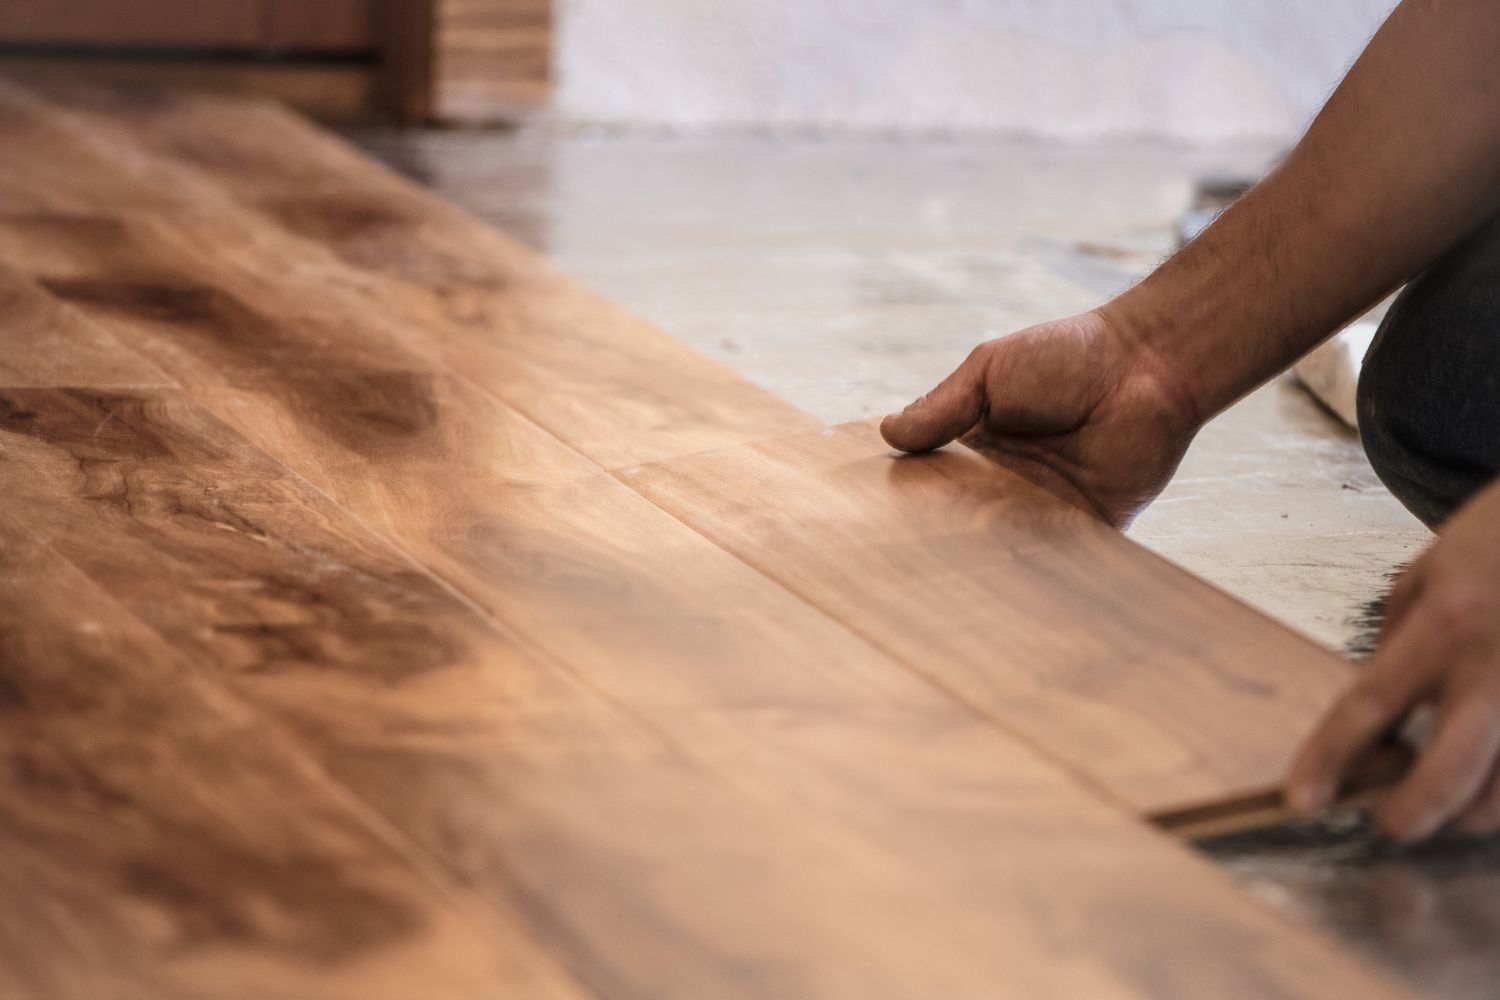 Hands of a Man Shown Installing Solid Wood Floor